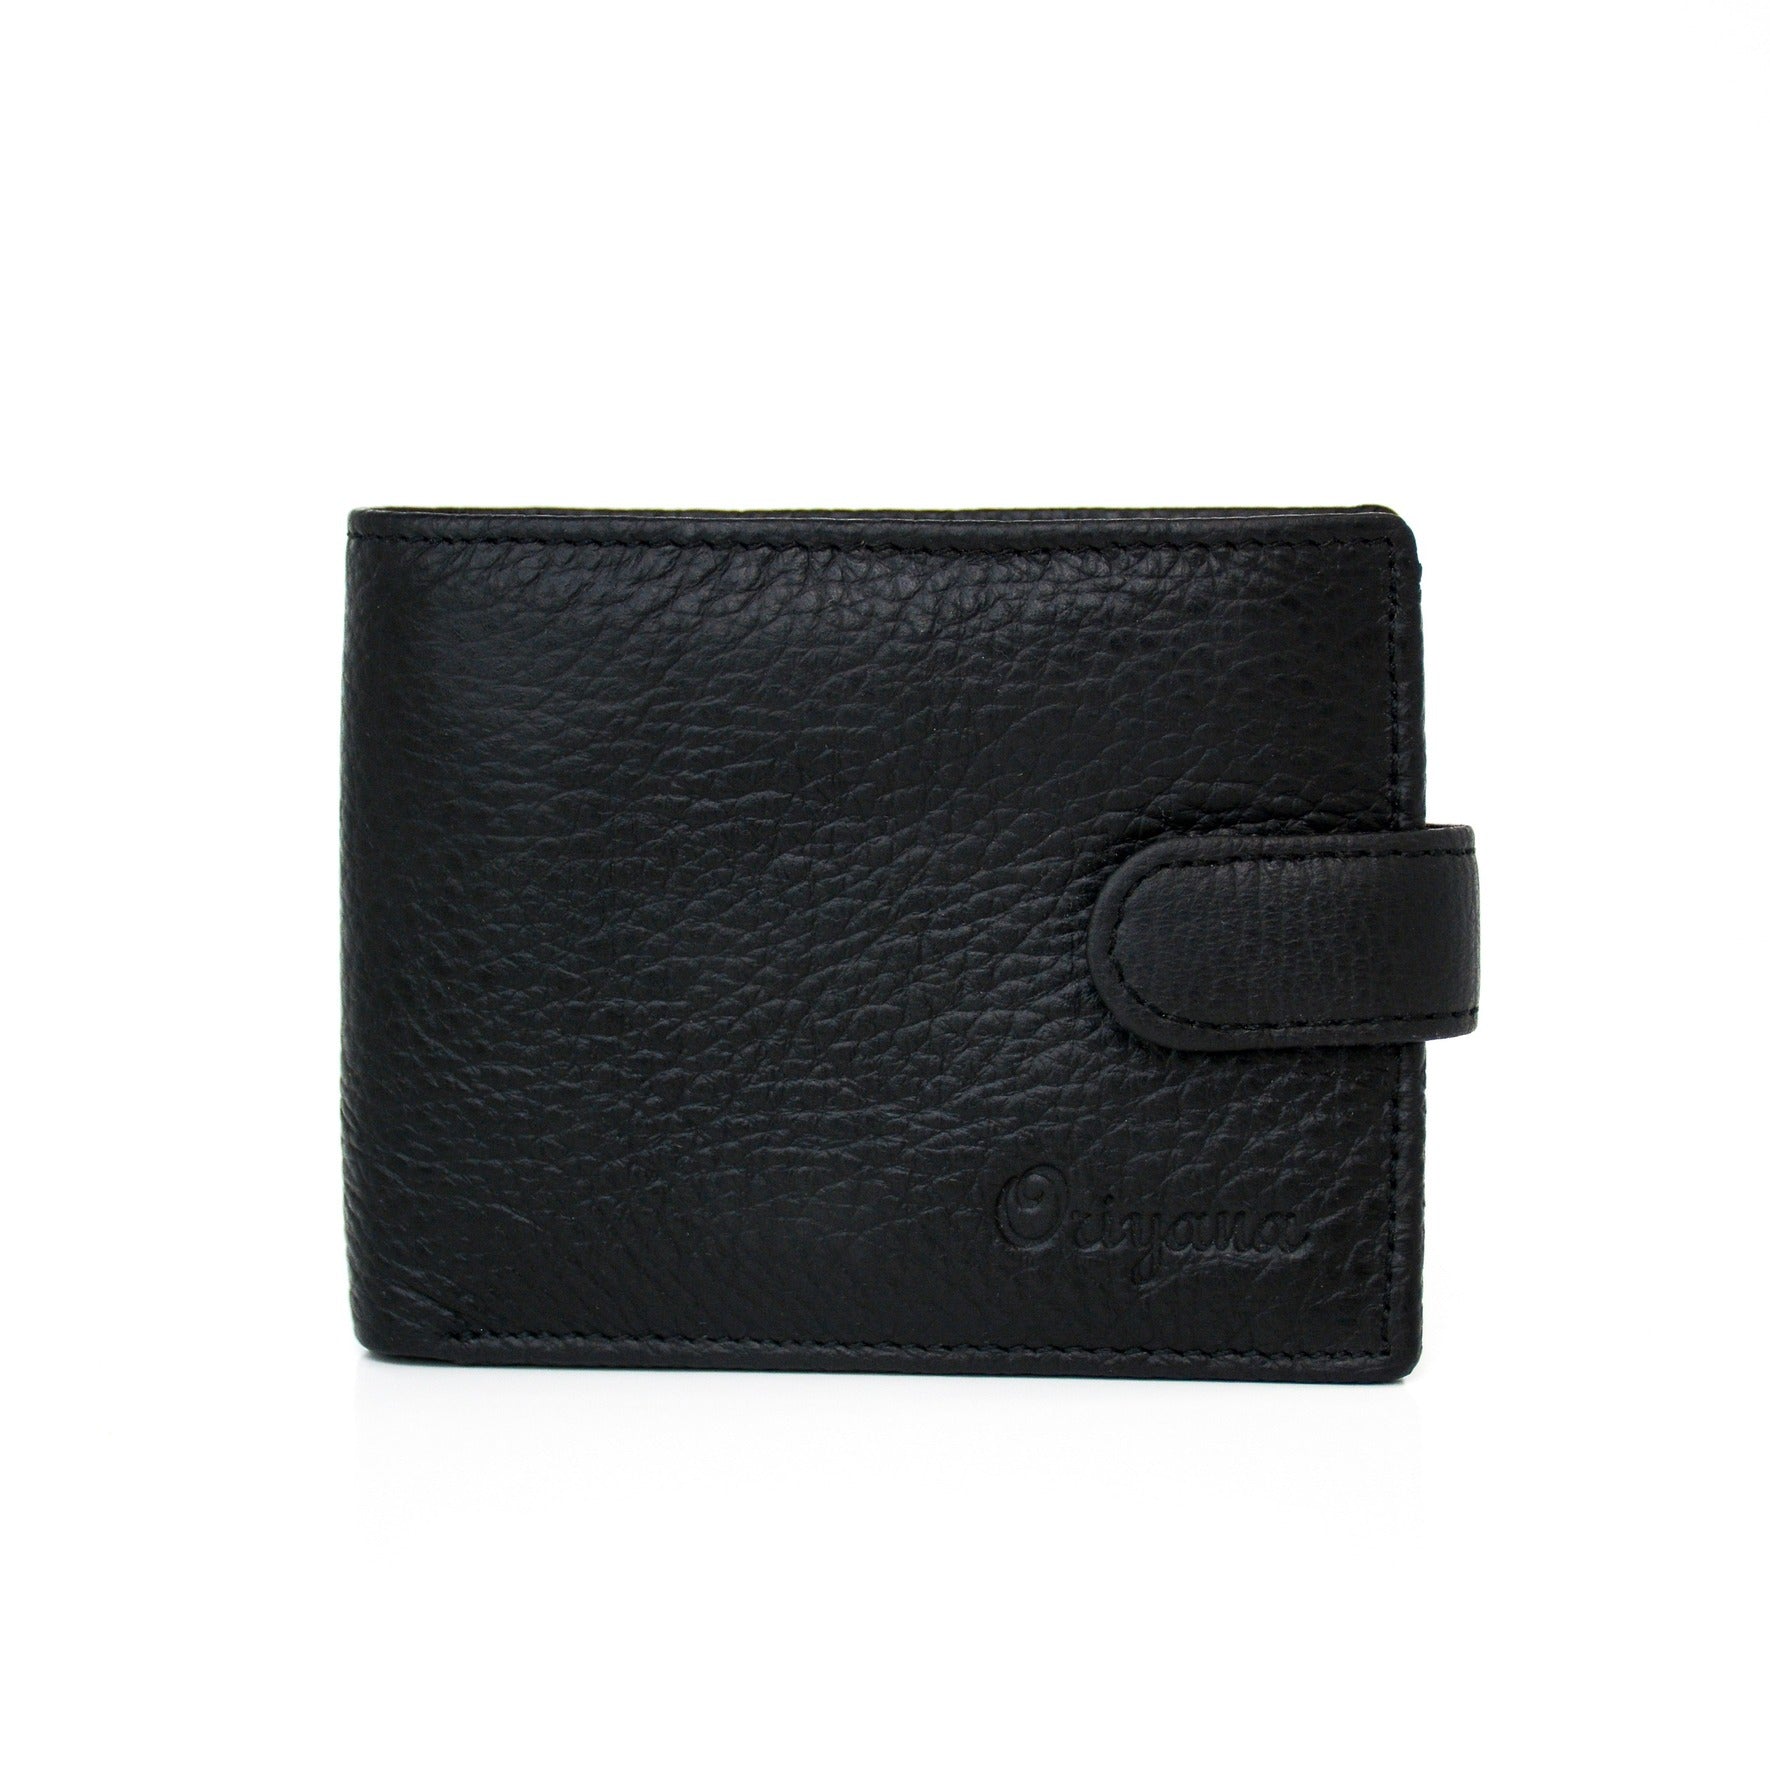 Oriyana 2 Fold Button Wallet WLT0010 For Men | Card Holder Wallet Zaappy.com